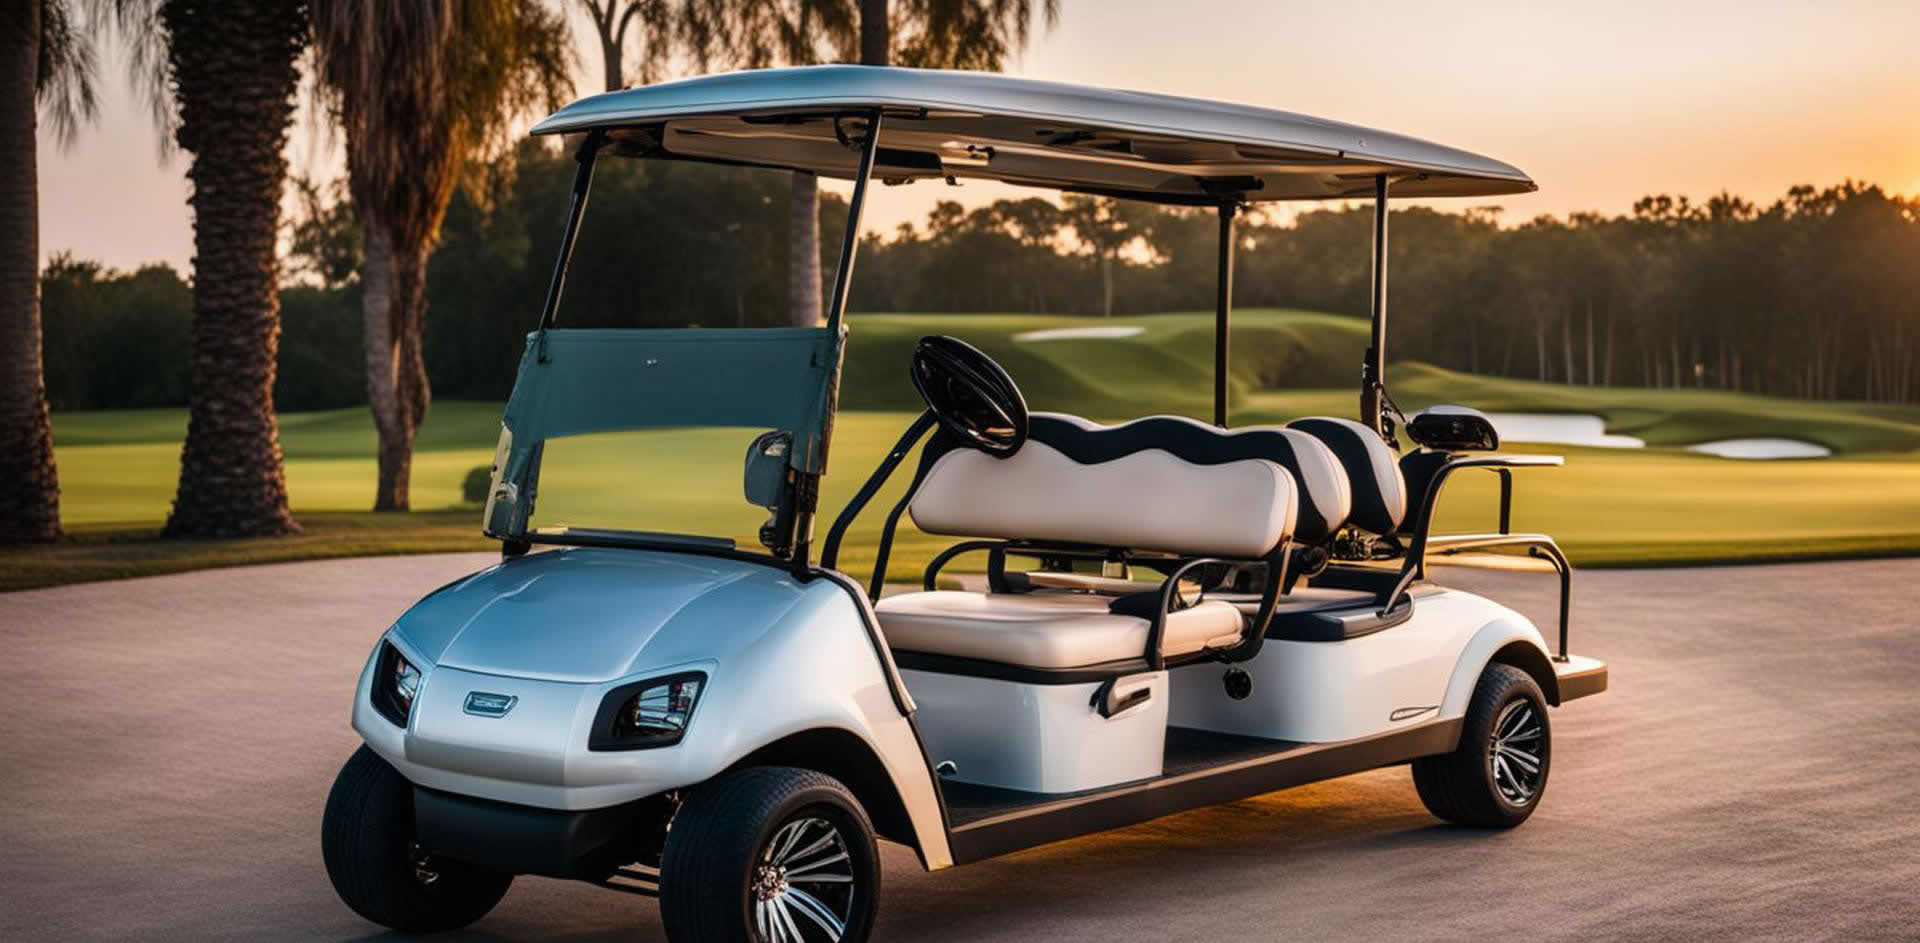 A golf cart parked in a golf club